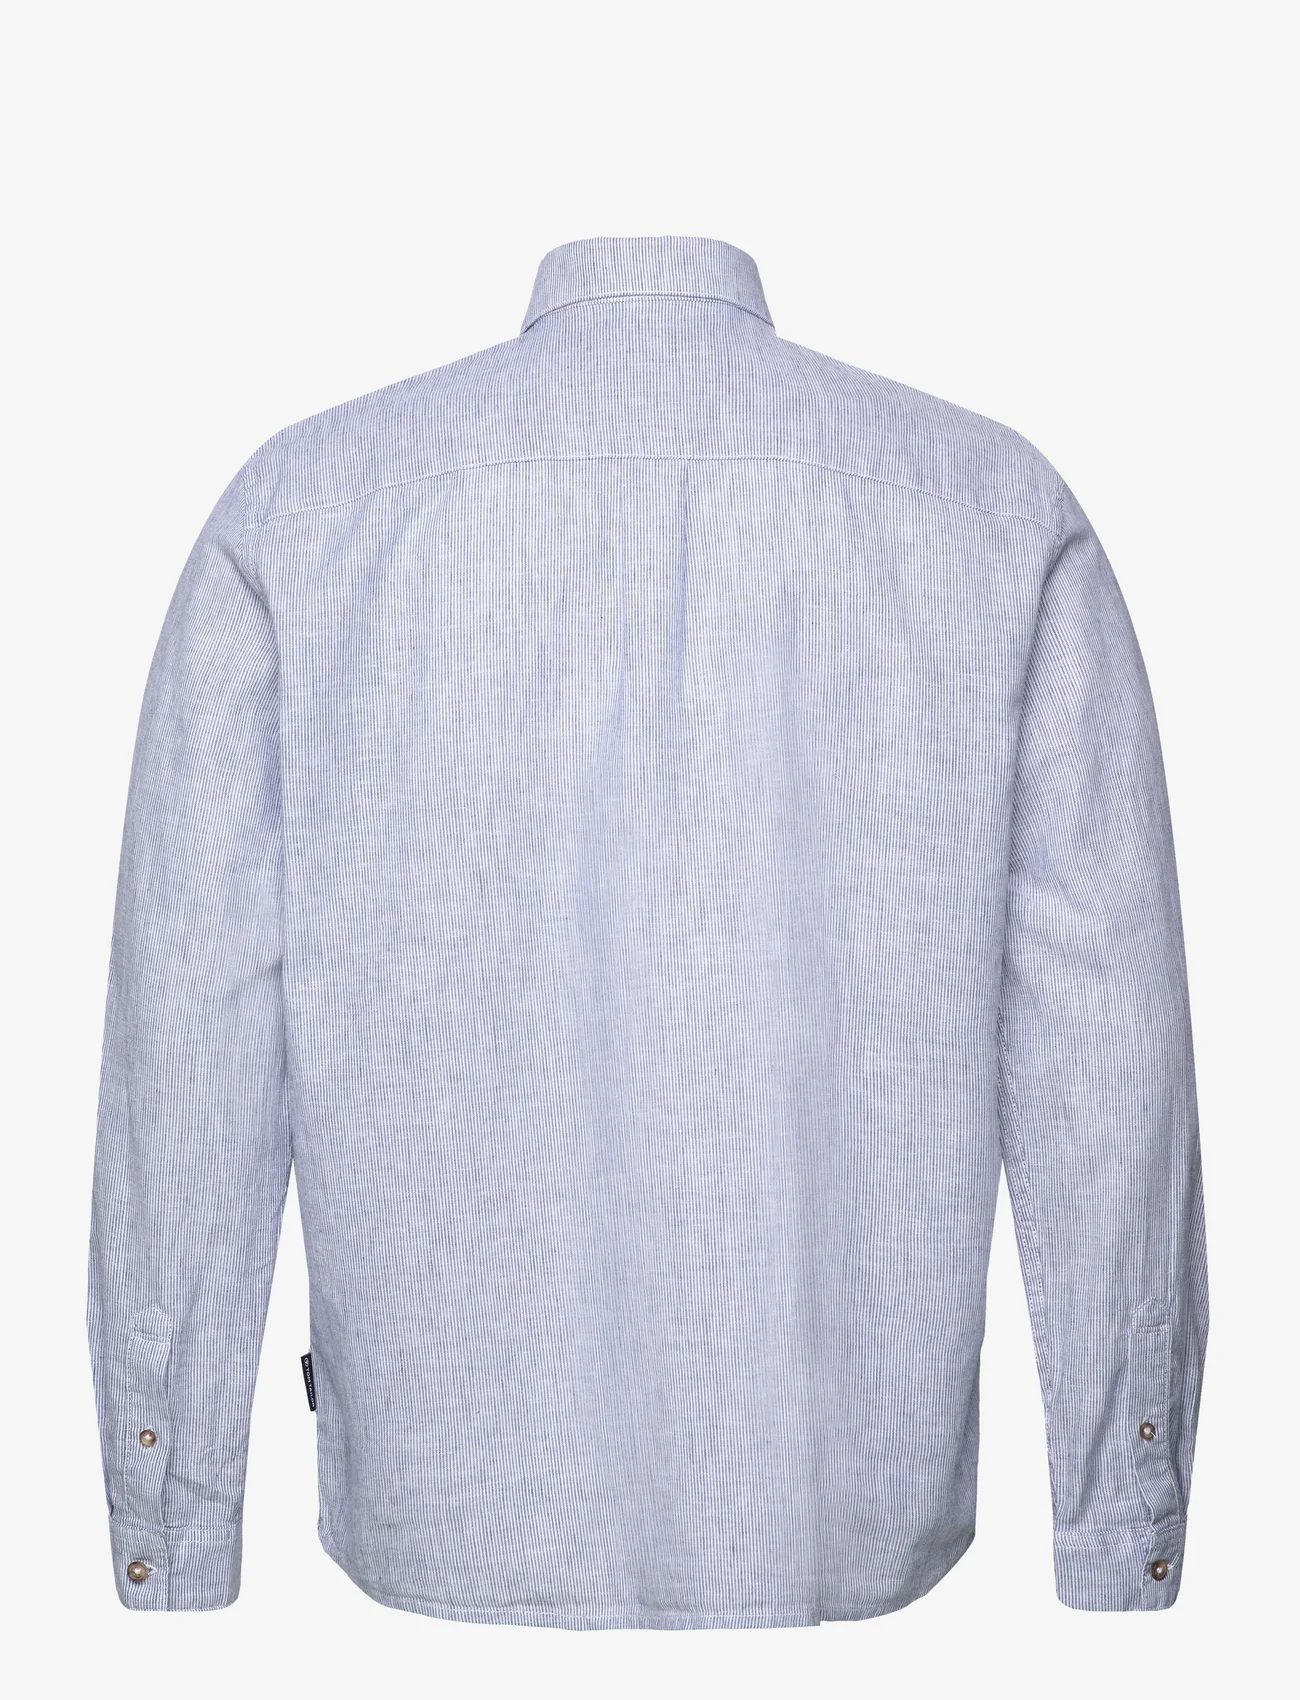 Tom Tailor - comfort cotton linen shirt - linen shirts - blue fine stripe - 1